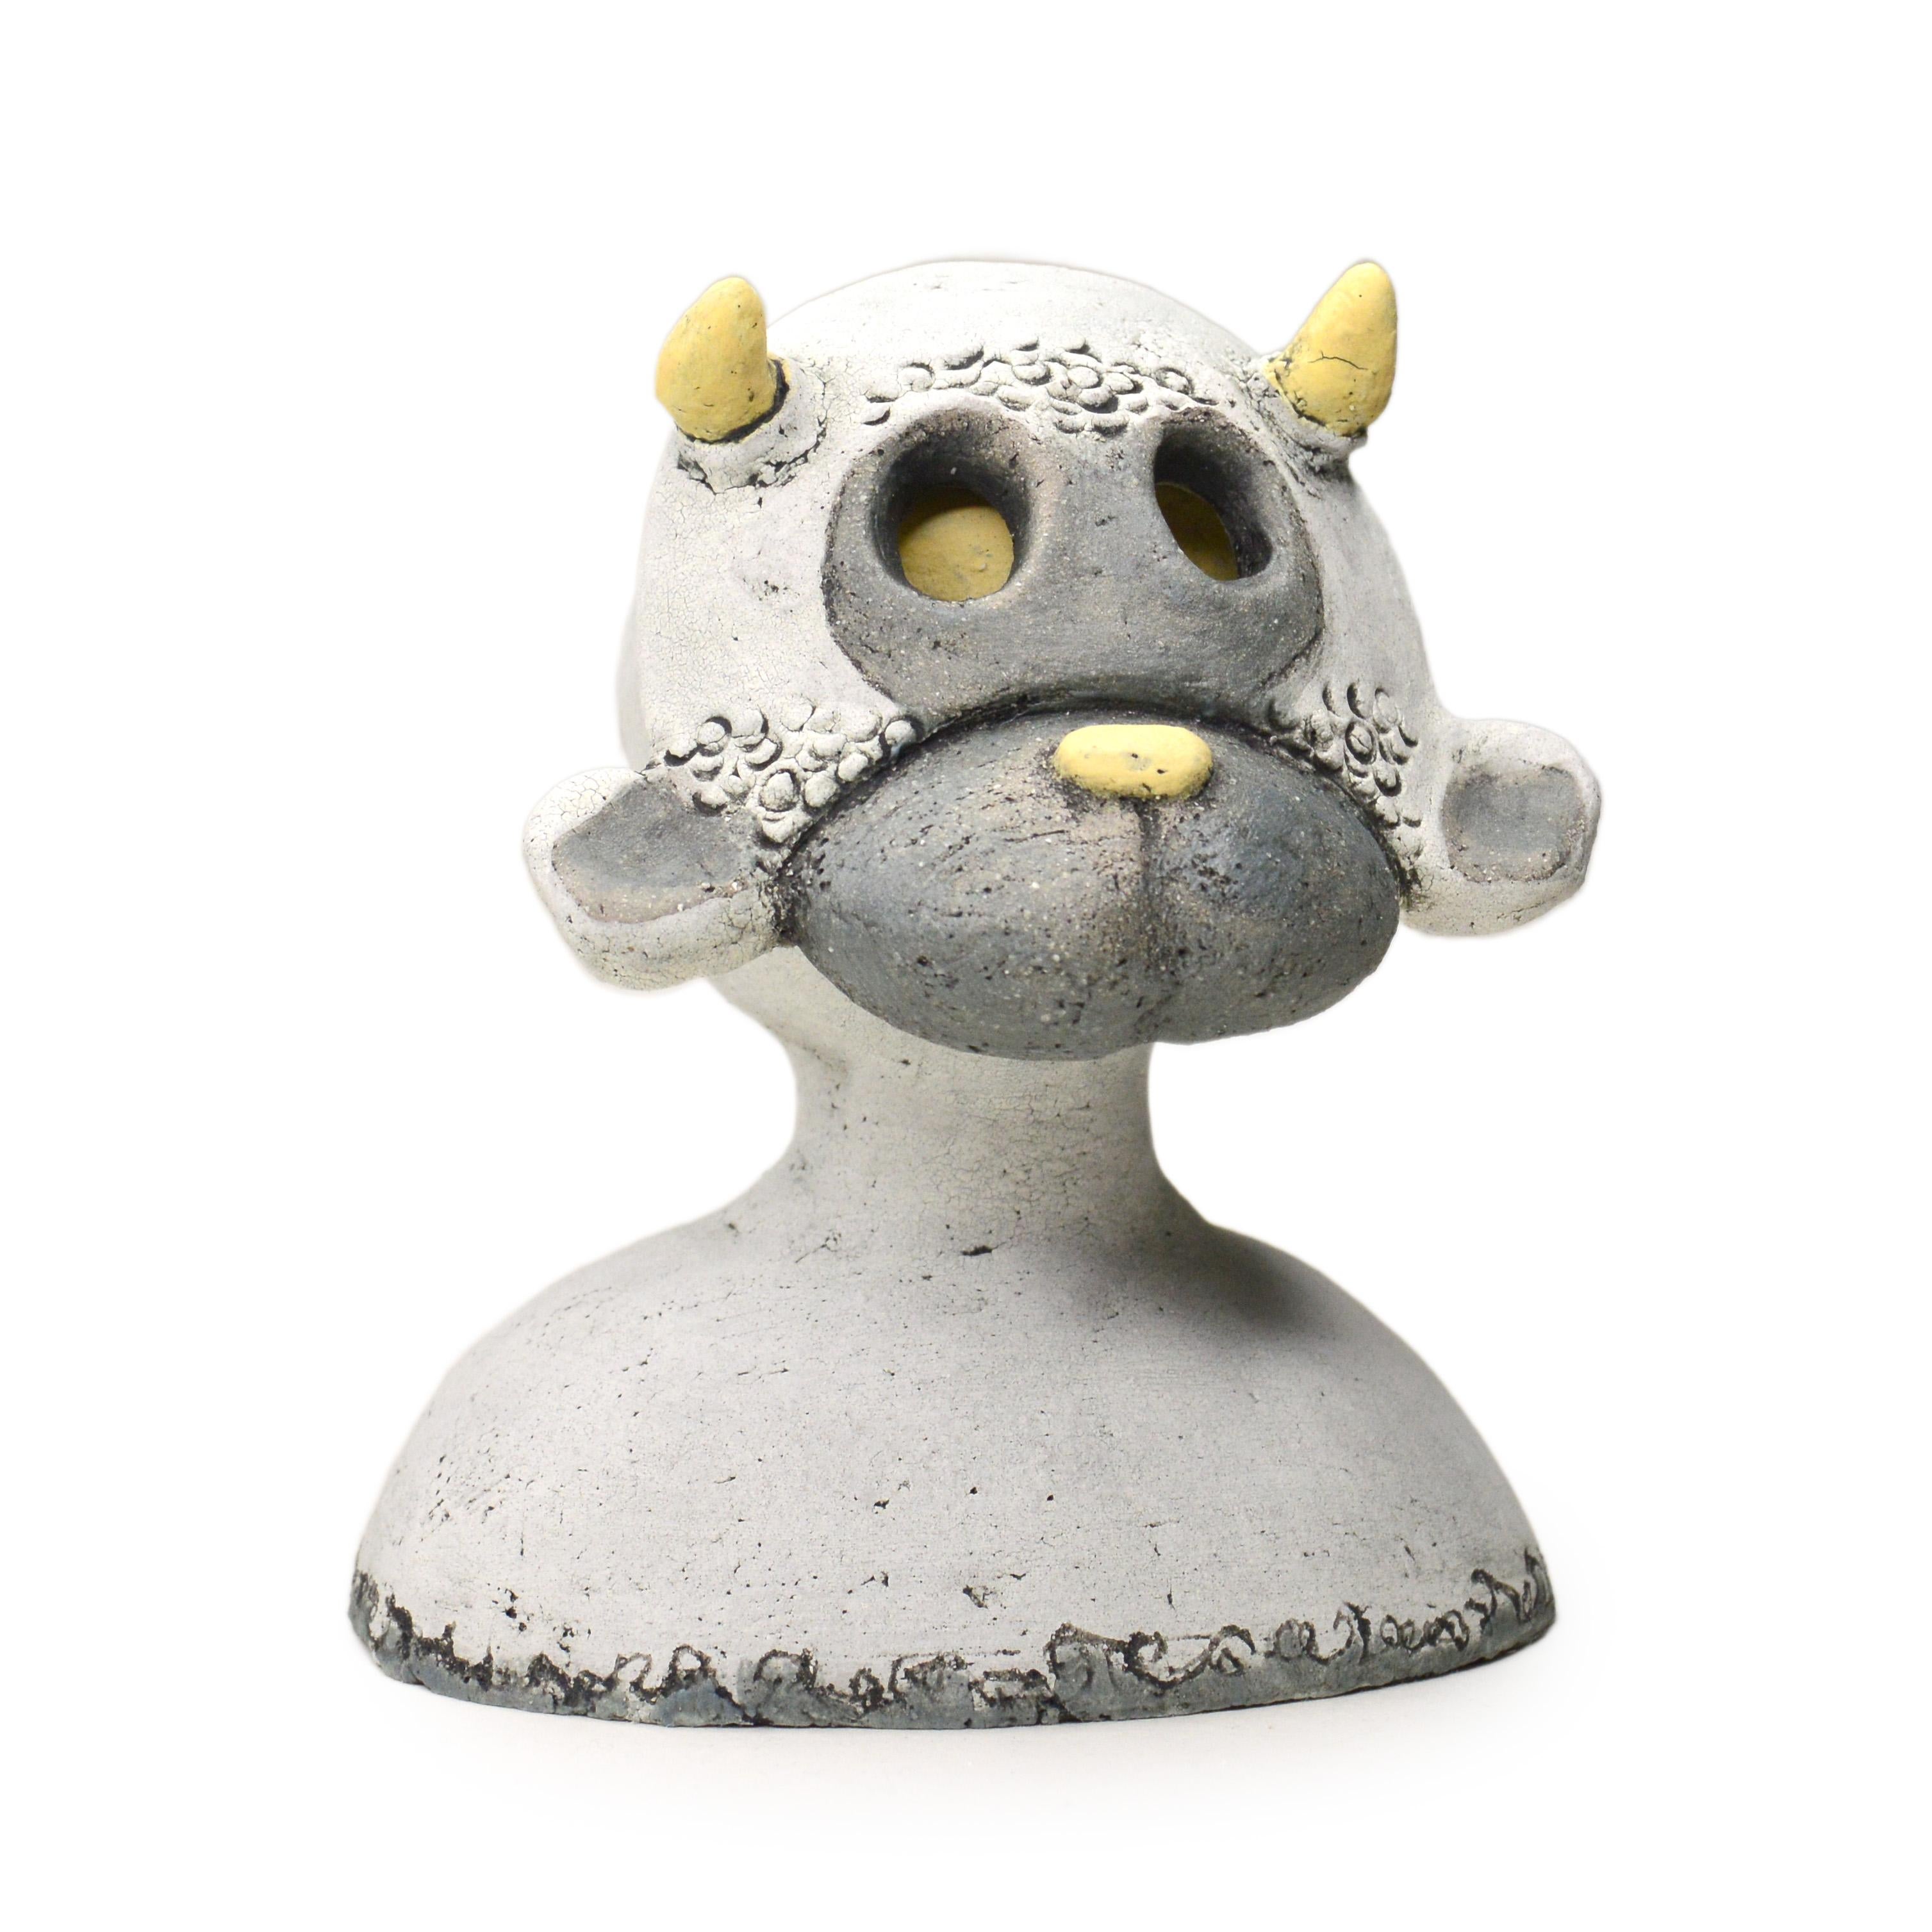 Pin·e·co 007 Original Ceramic Sculpture with a sheep mask - Gray Figurative Sculpture by Renate Frotscher